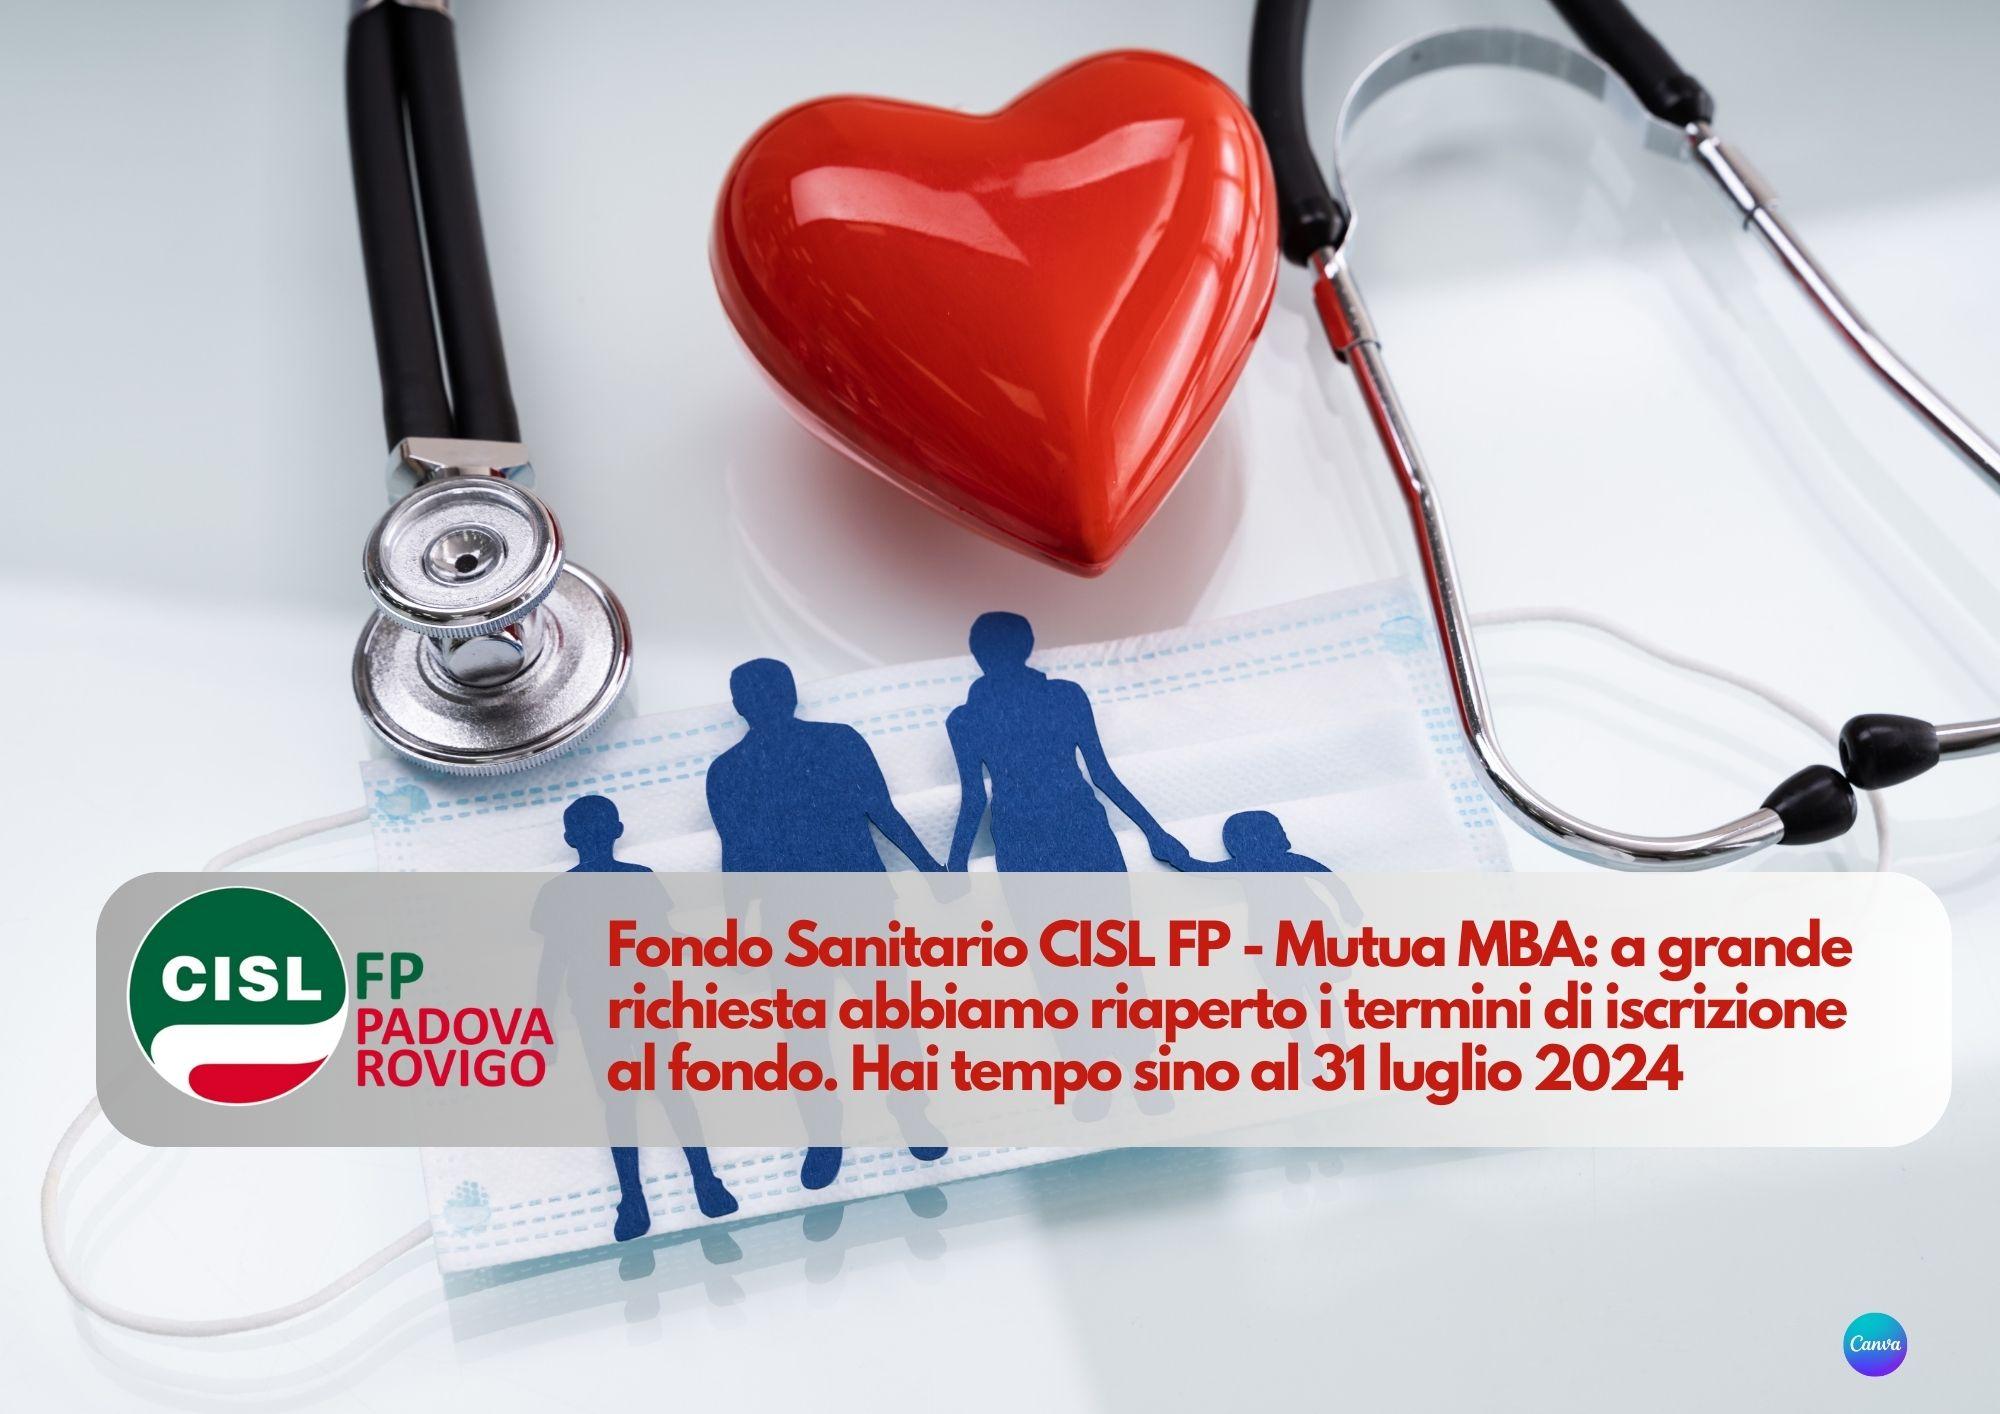 CISL FP Padova Rovigo. Fondo Sanitario CISL FP - Mutua MBA: apertura adesione straordinaria